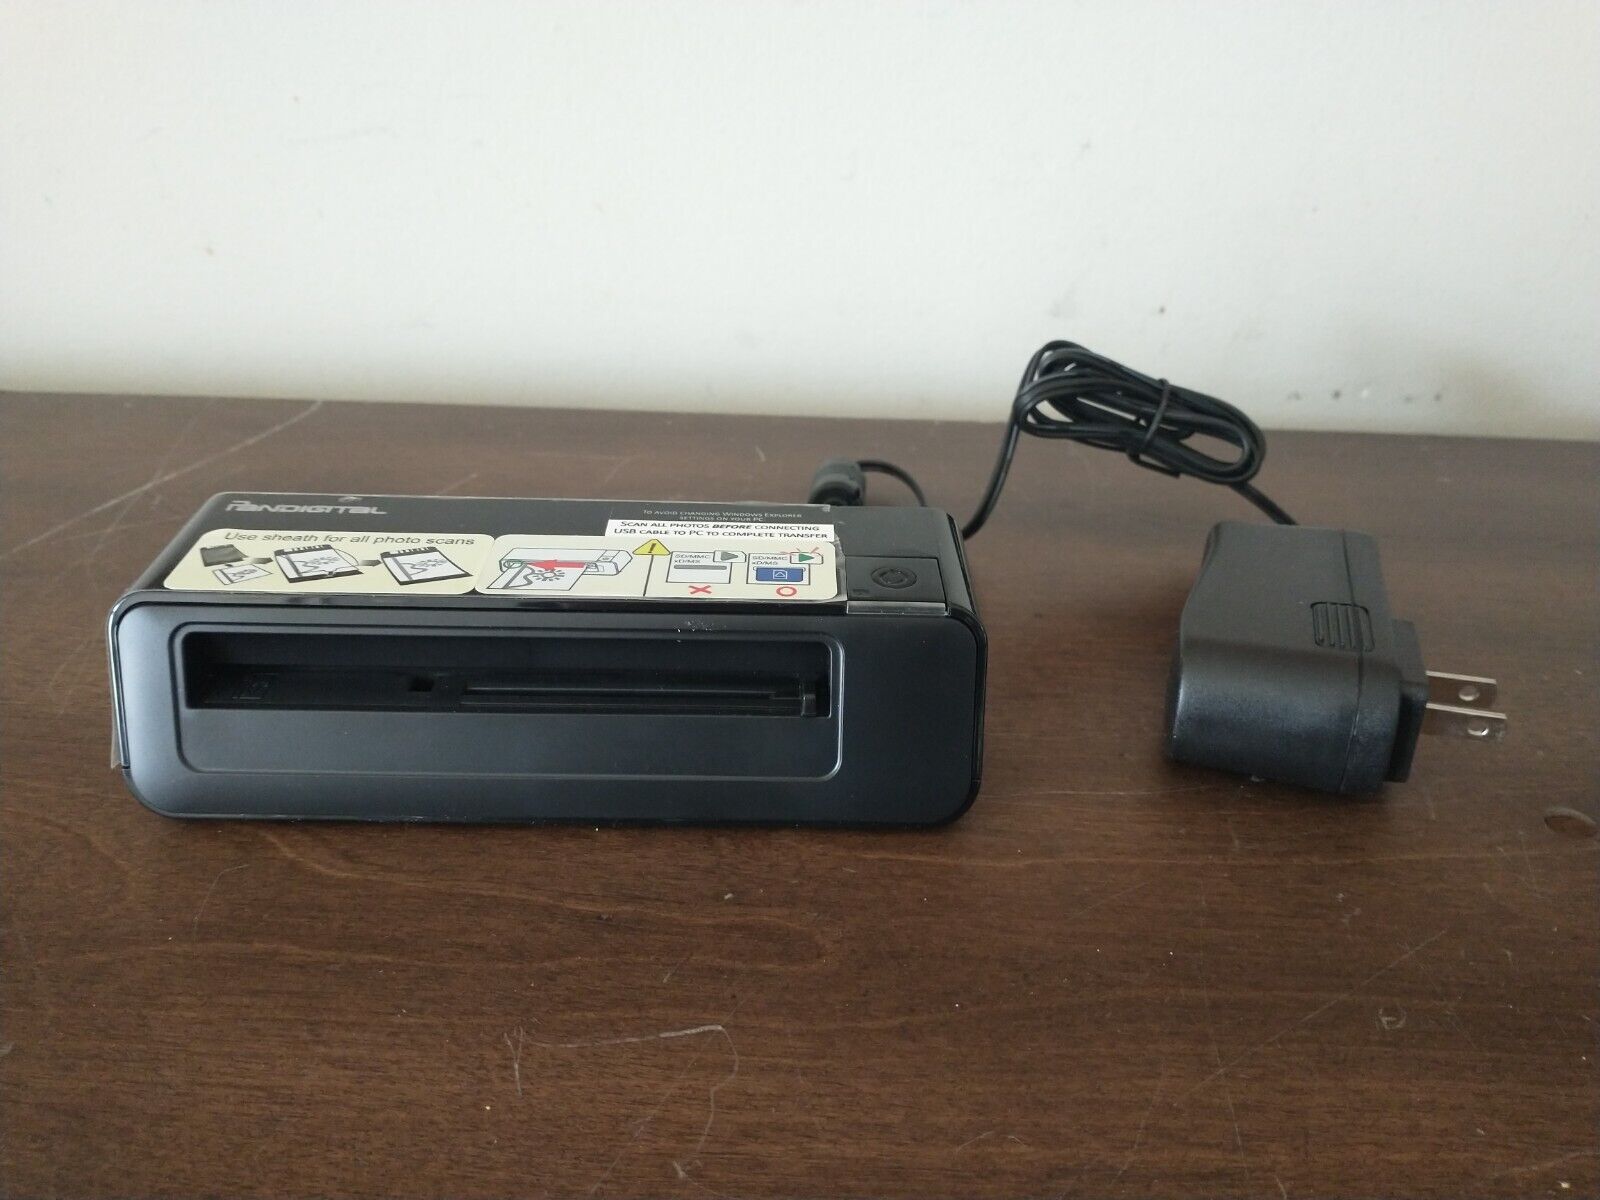 Pandigital Photolink PANSCN02 One Touch Print Scanner, Original Packaging - RJ